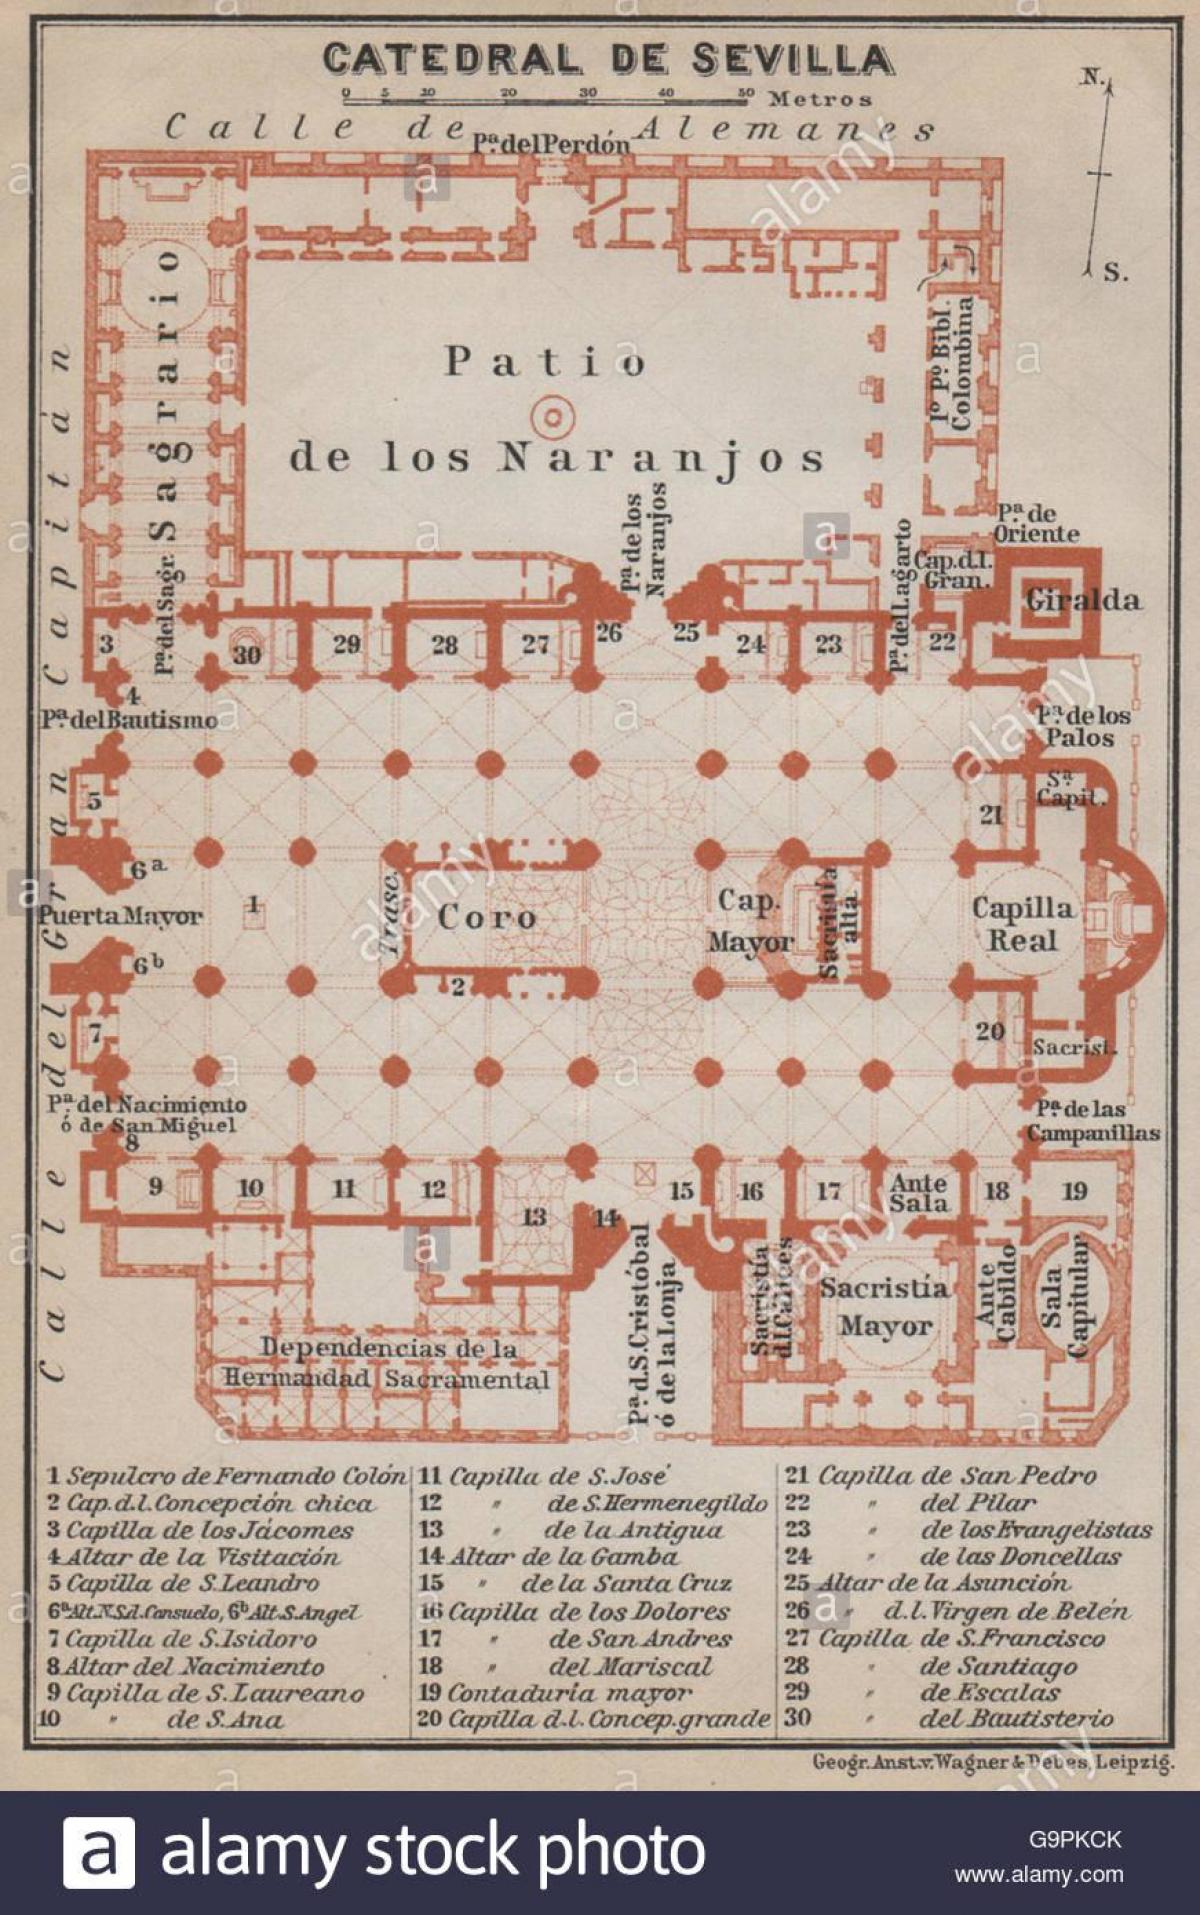 kaart van Sevilla-katedraal